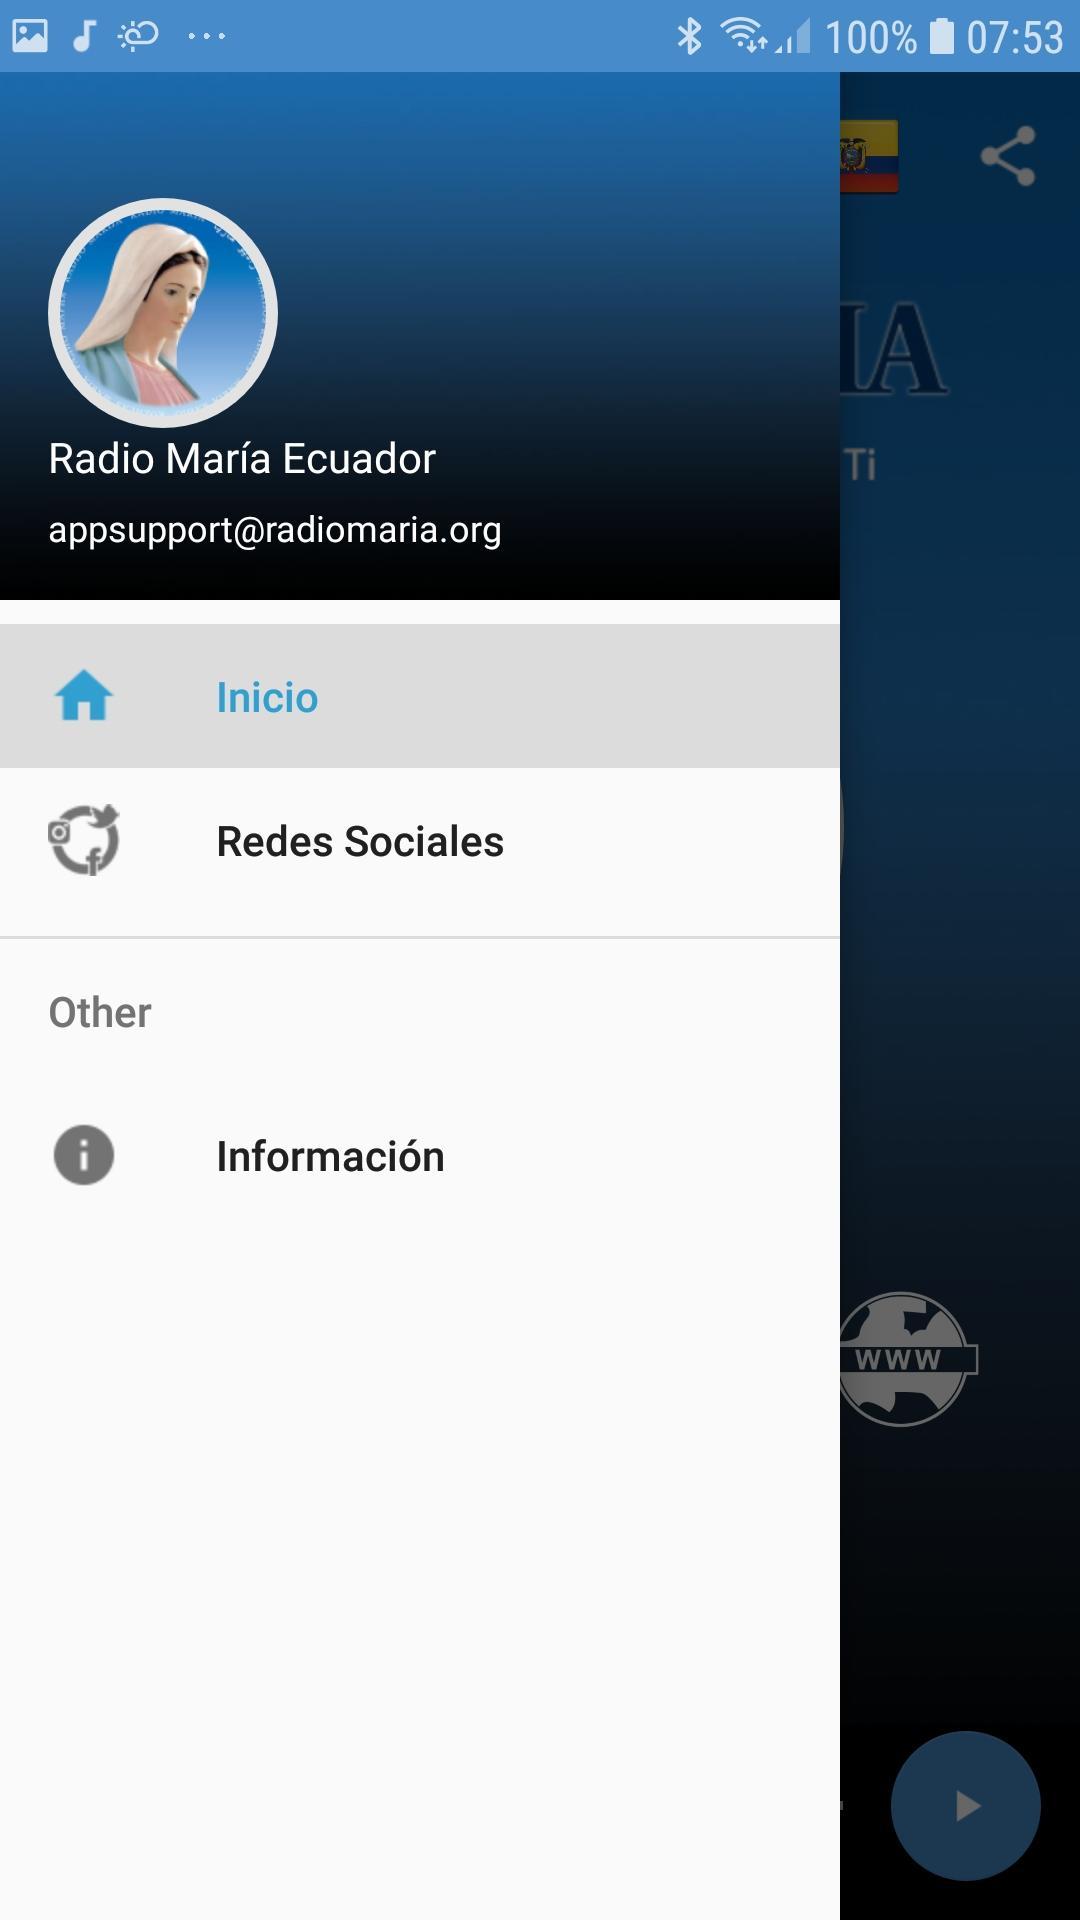 Radio Maria Ecuador for Android - APK Download